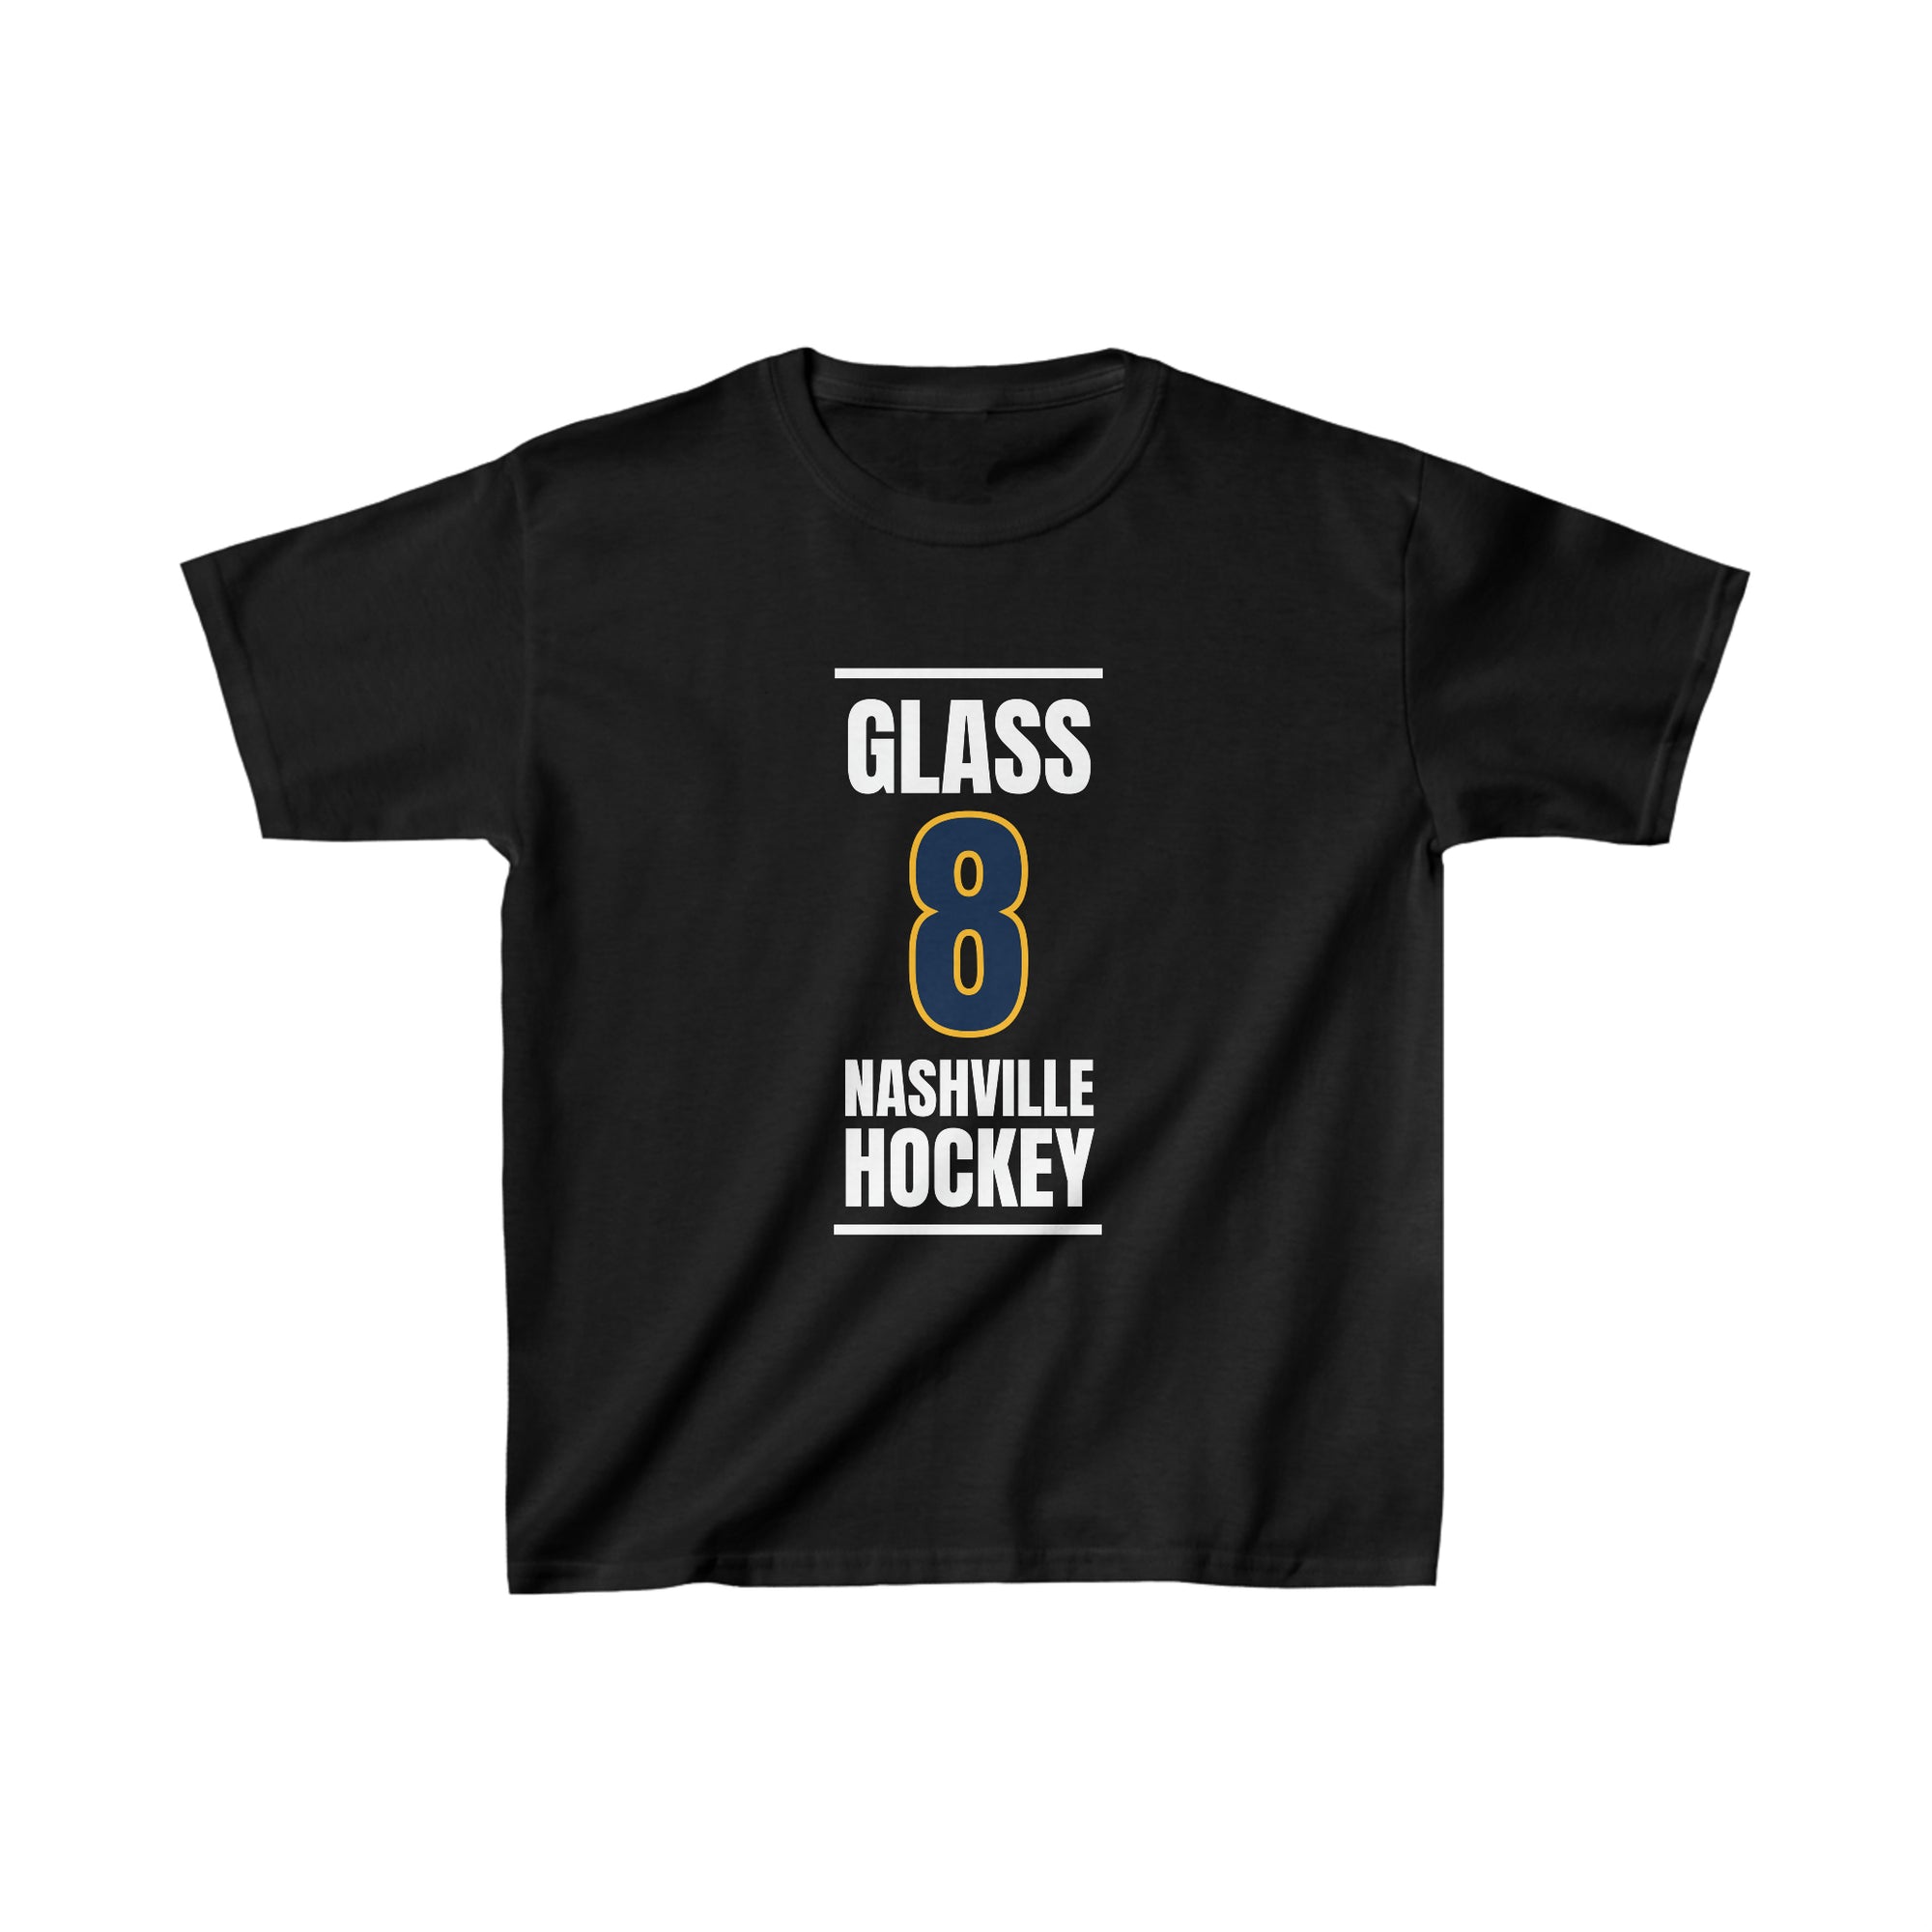 Glass 8 Nashville Hockey Navy Blue Vertical Design Kids Tee